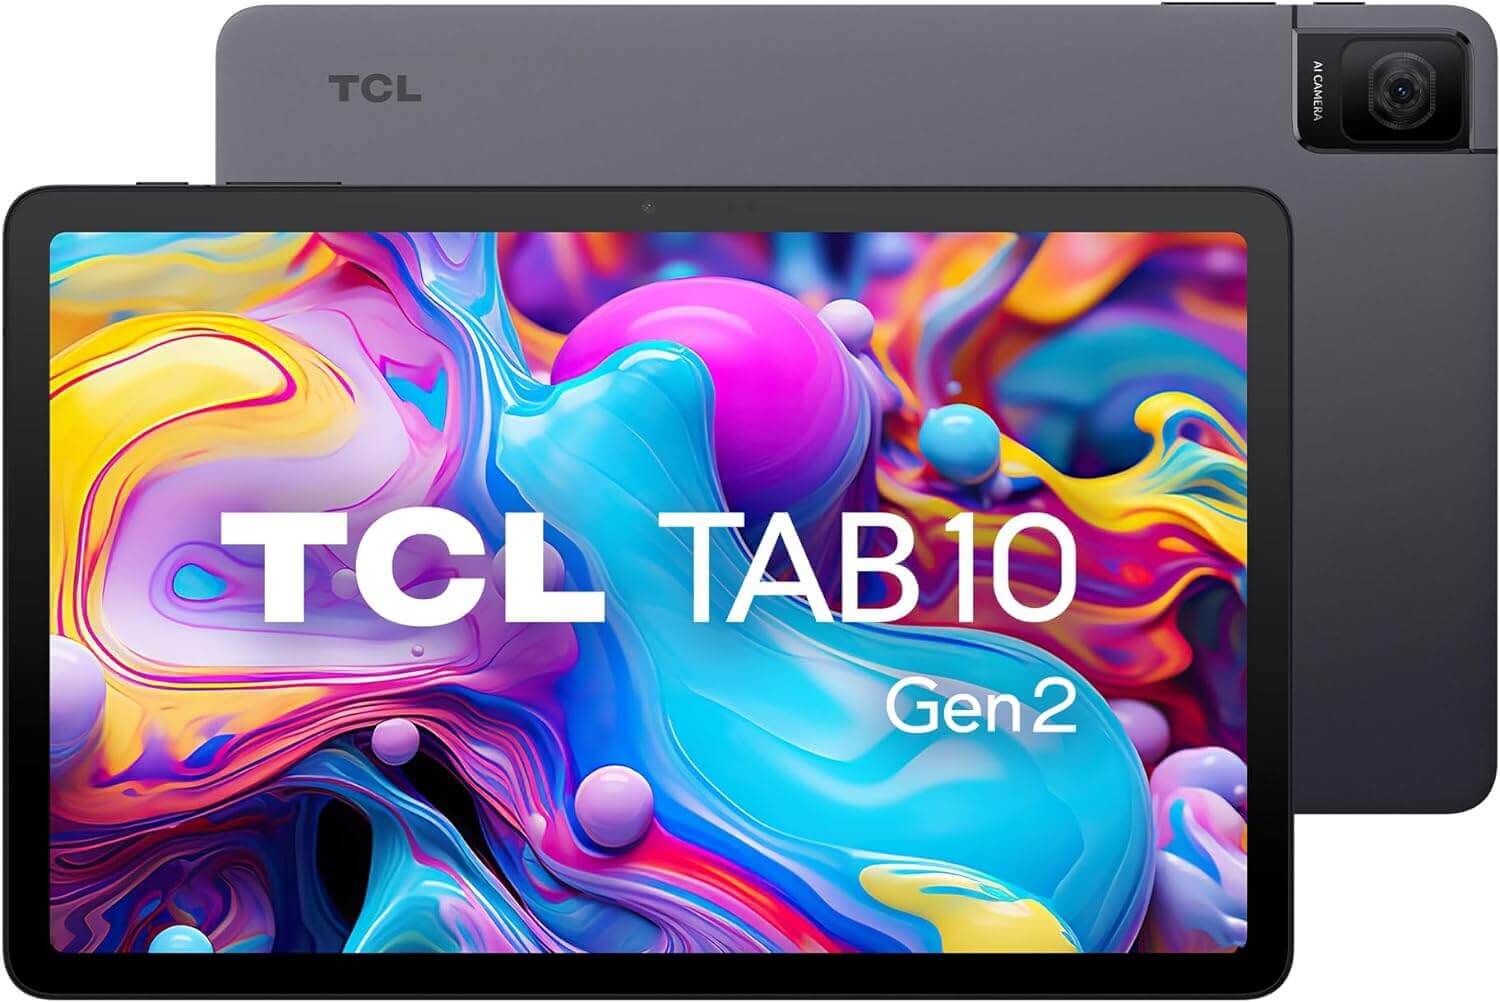 TCL TAB 10 Gen 2 - Good e-Reader